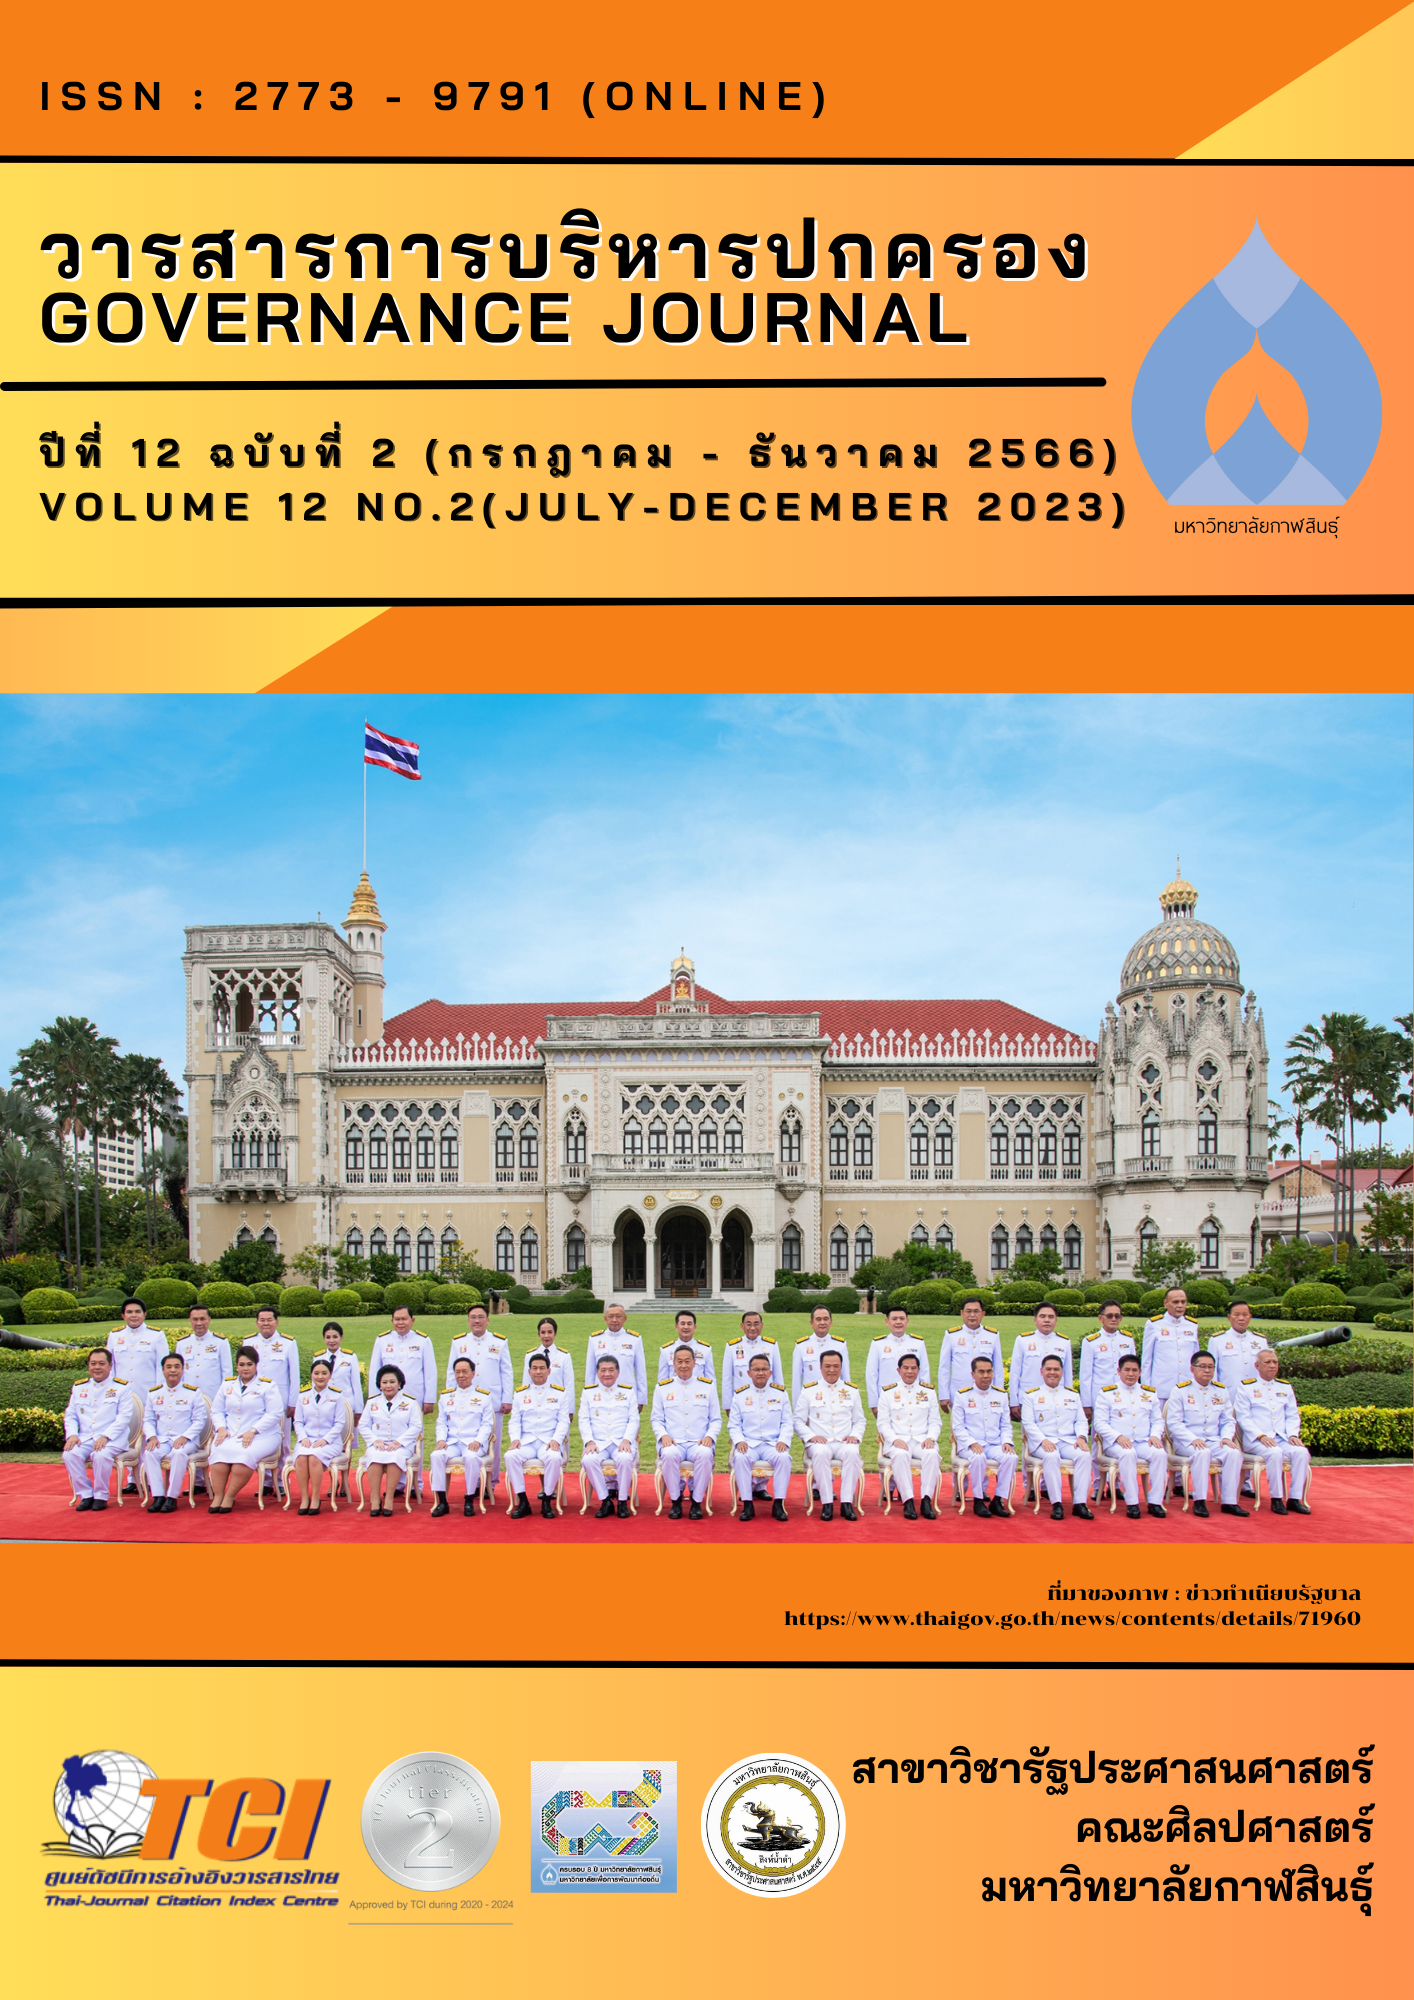 					View Vol. 12 No. 2 (2023): Governance  Journal (July - December)
				